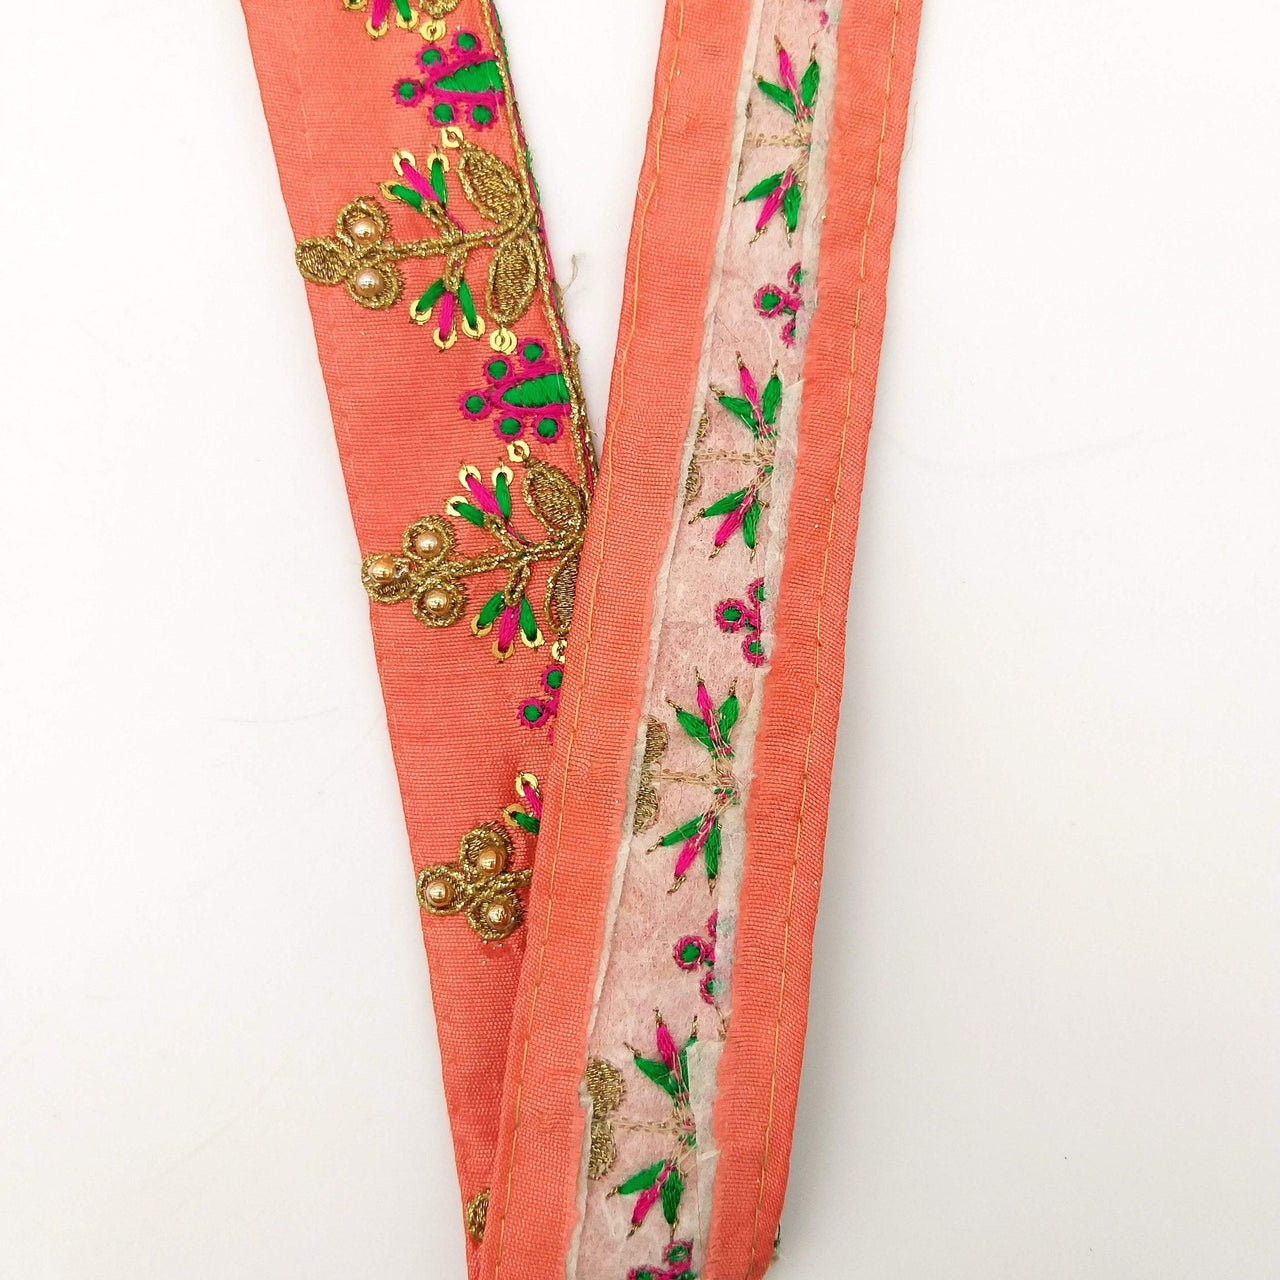 Orange Art Silk Trim In Green And Gold Embroidery, Approx. 32mm wide, Decorative Trim